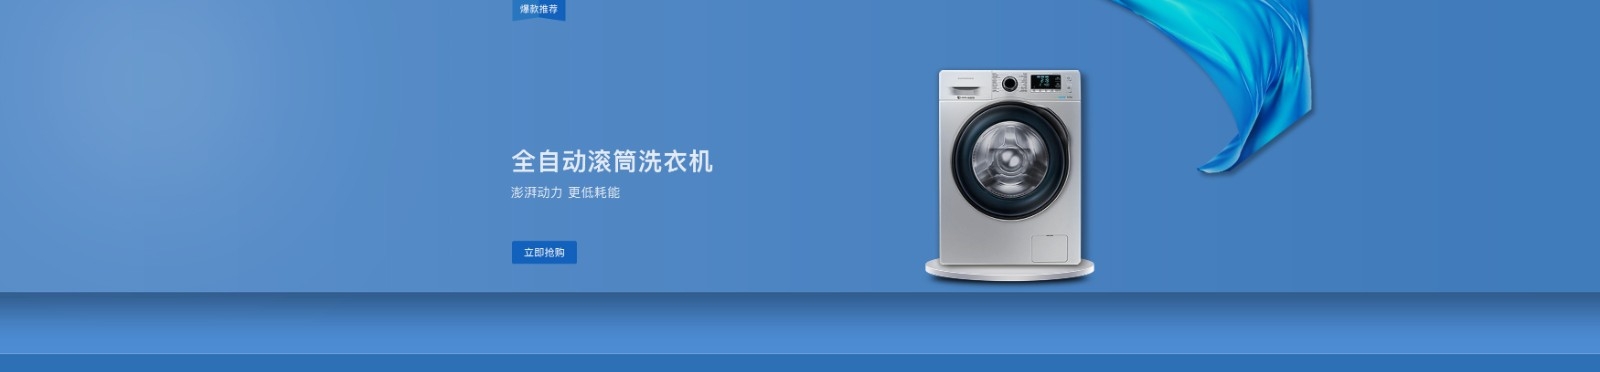 PC4洗衣機